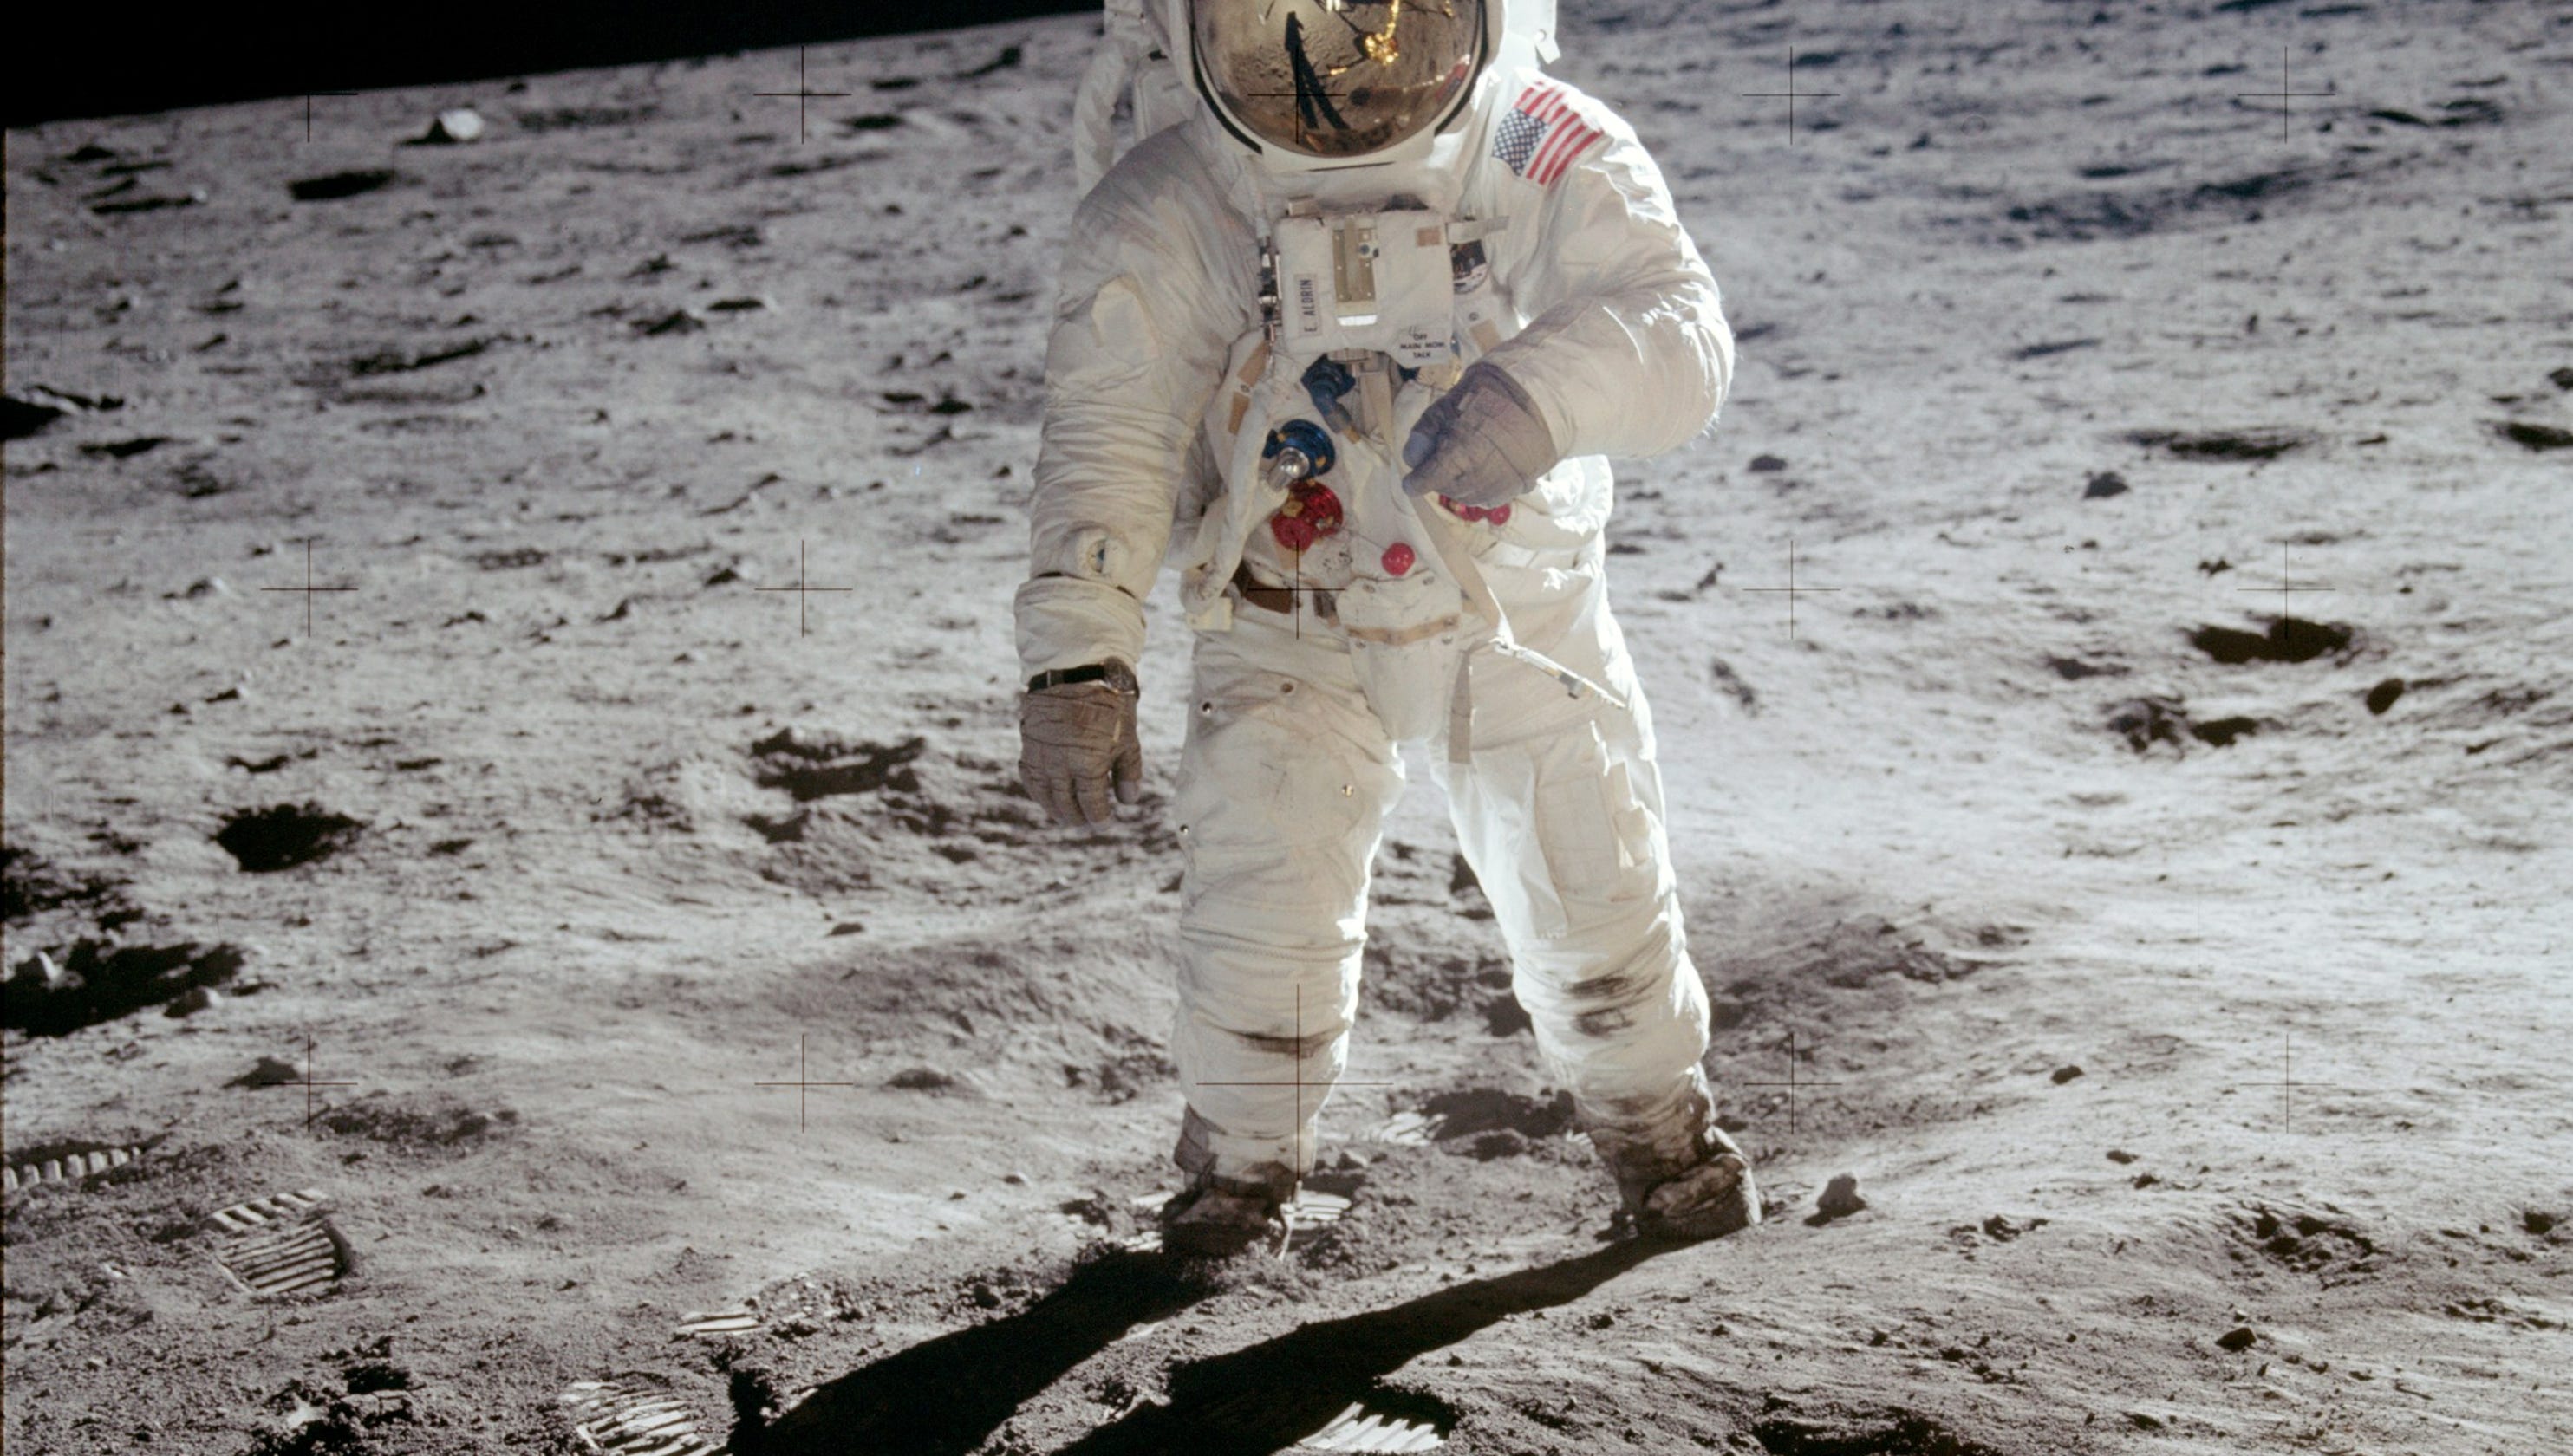 first man to visit moon